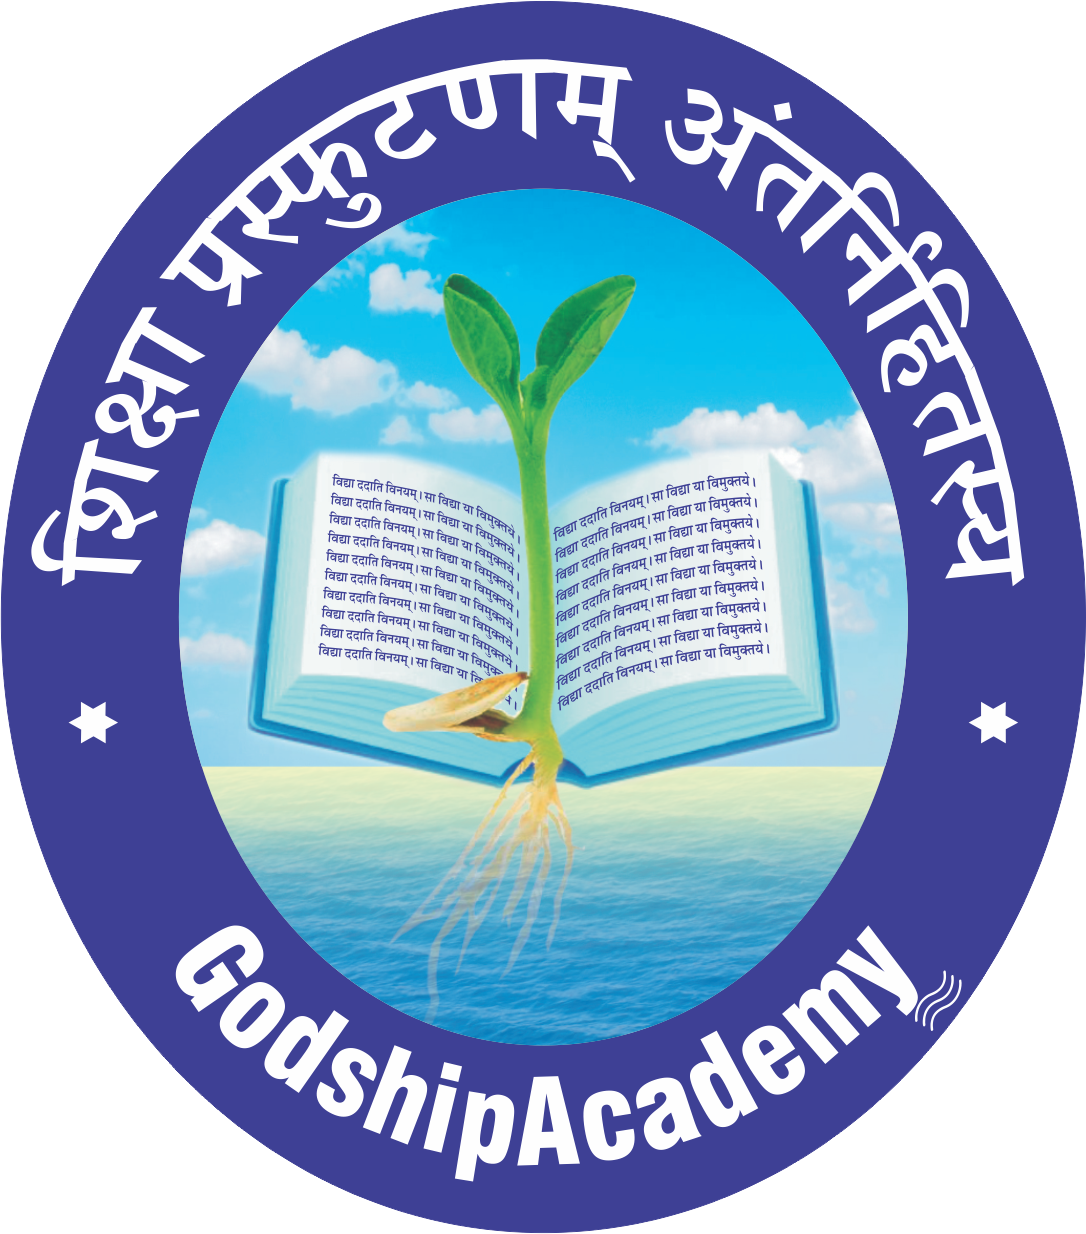 Godship Academy